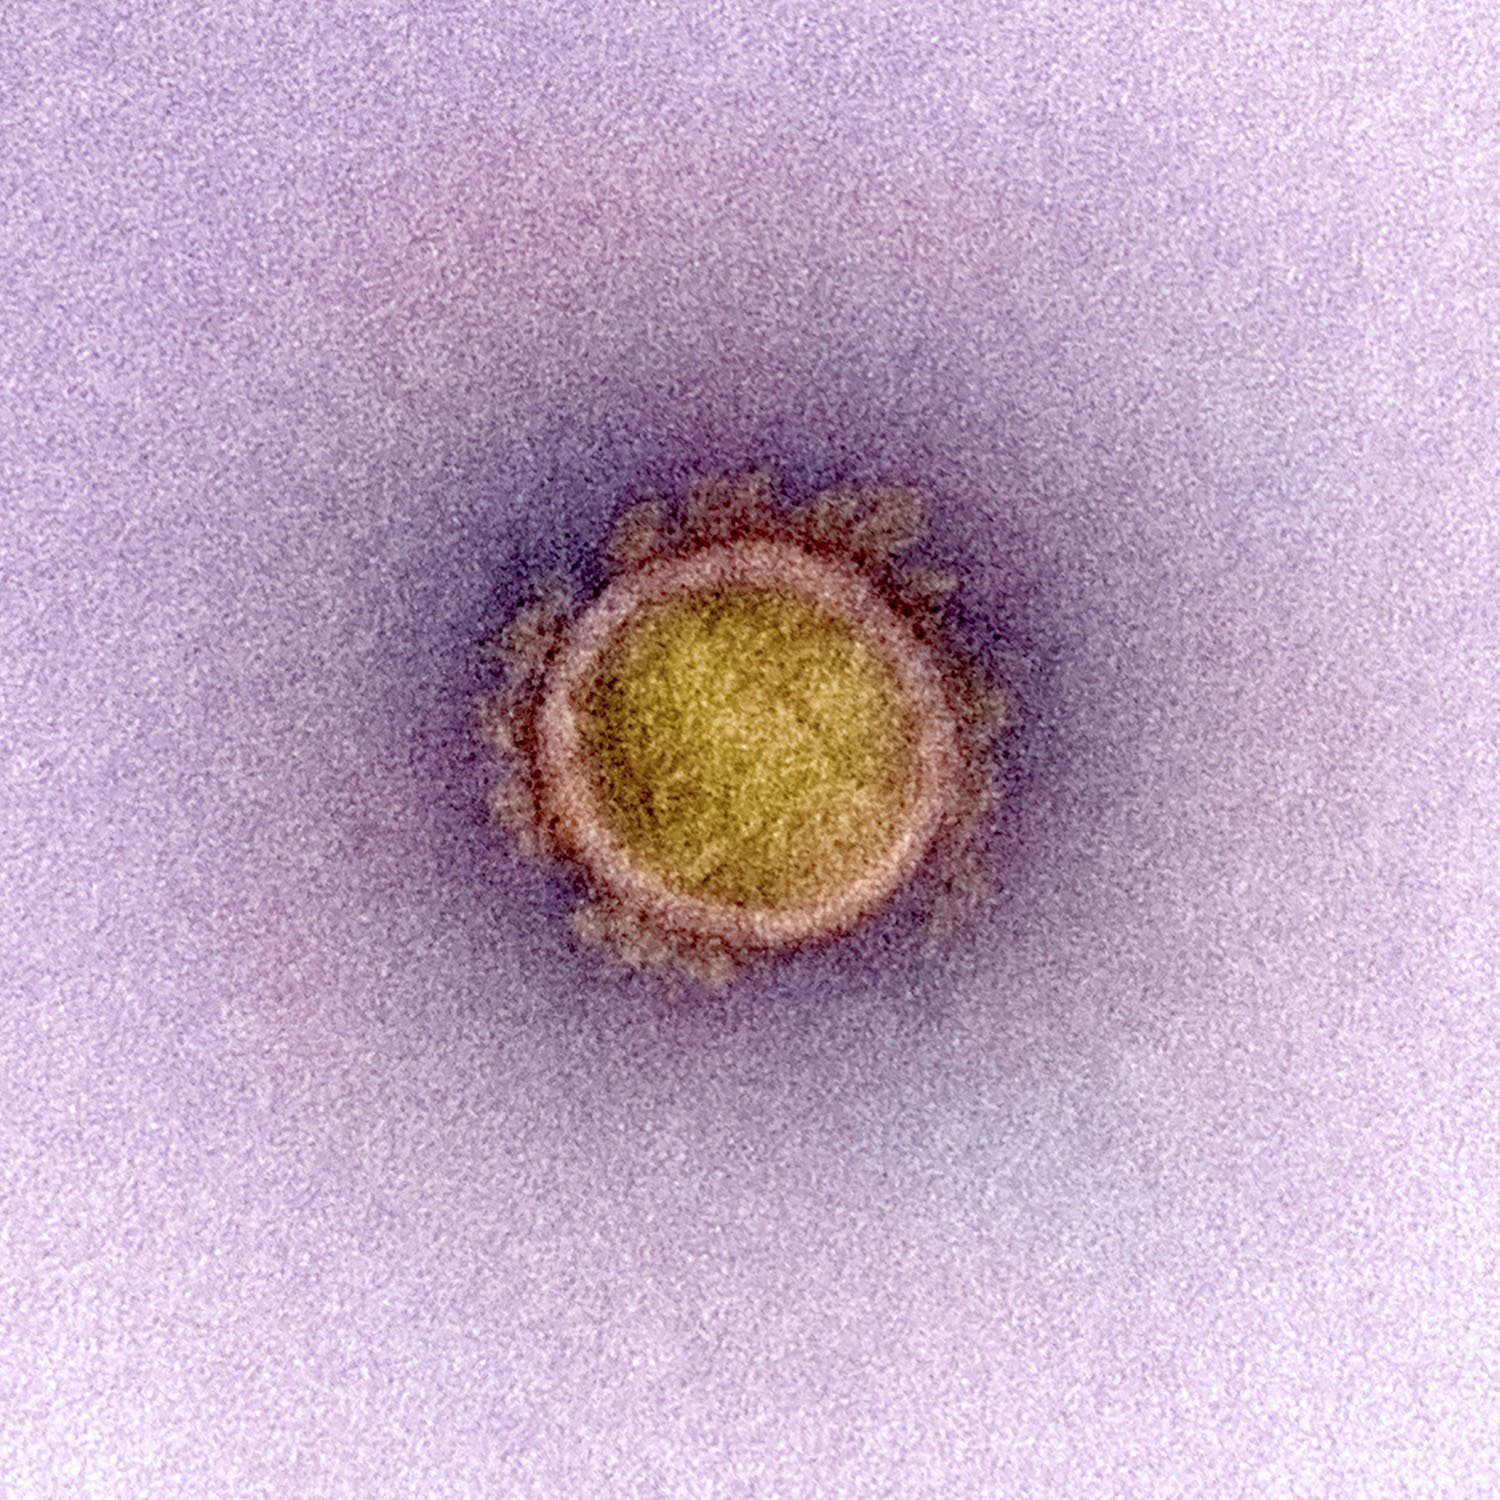 Imagen detallada de un coronavirus 